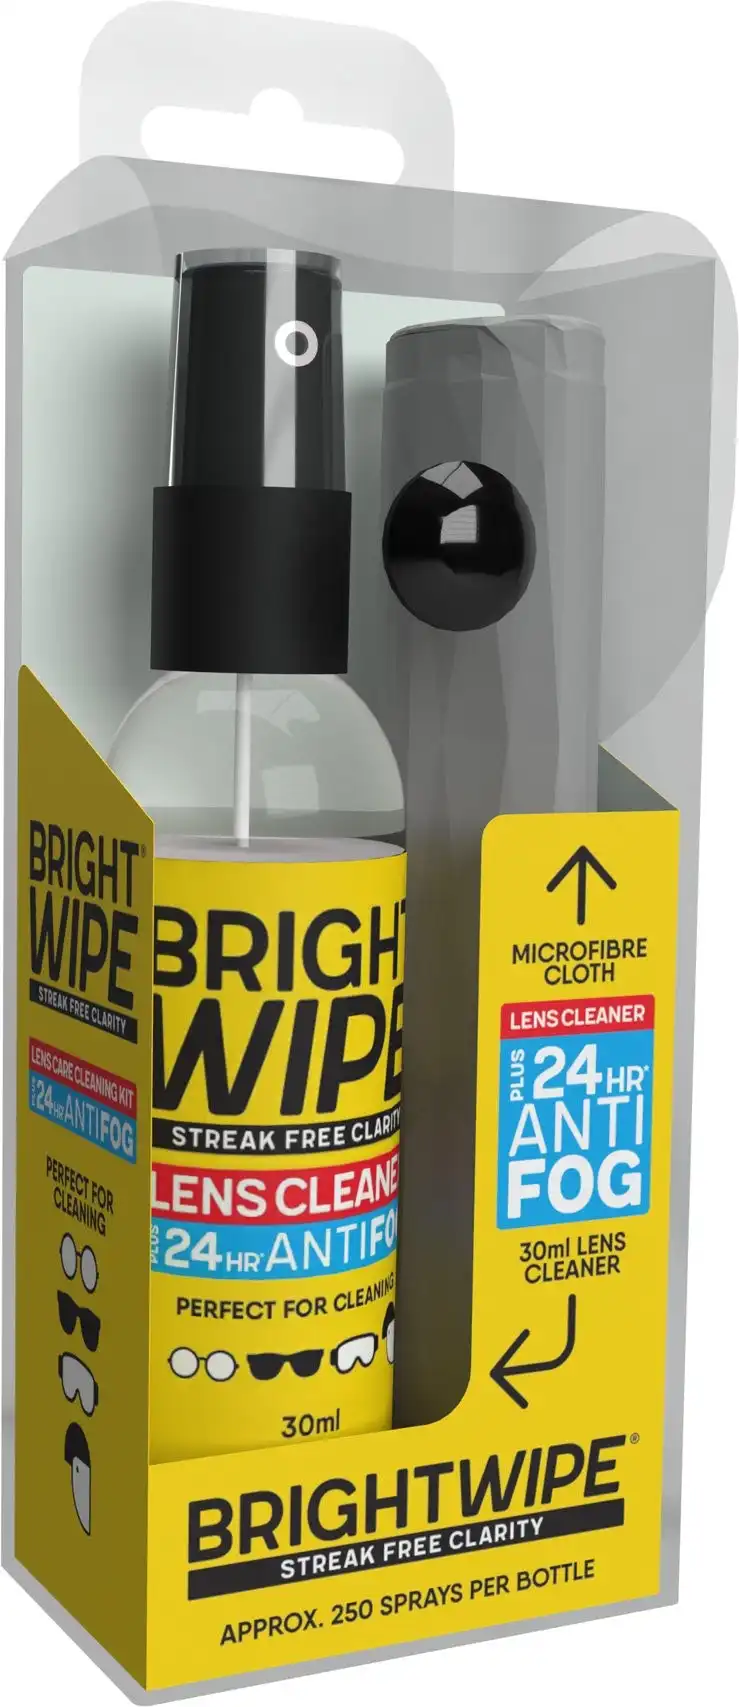 Bright Wipe Antifog Lens Care Kit